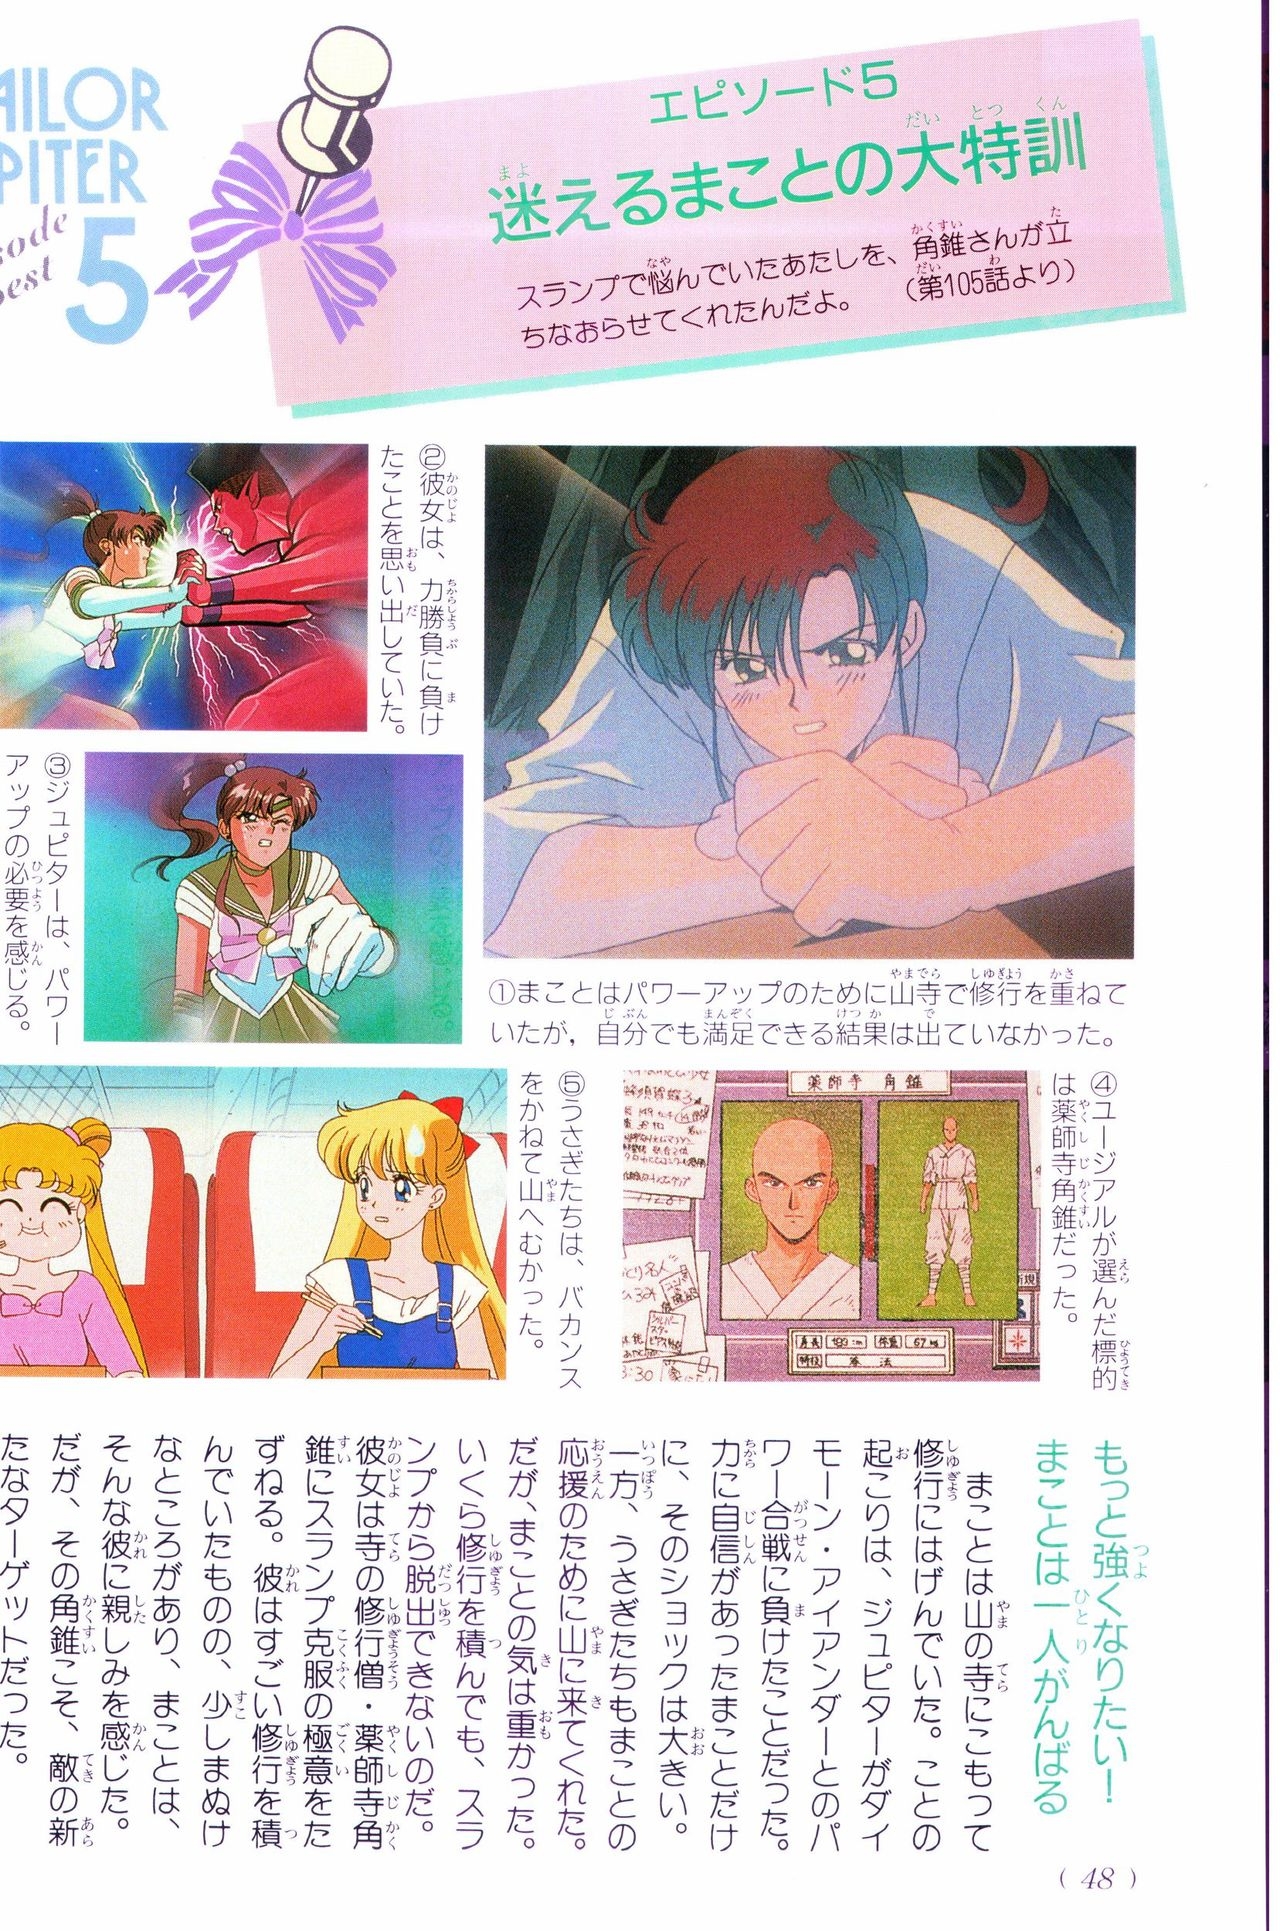 Sailor Moon Official Fan Book – Sailor Jupiter 39